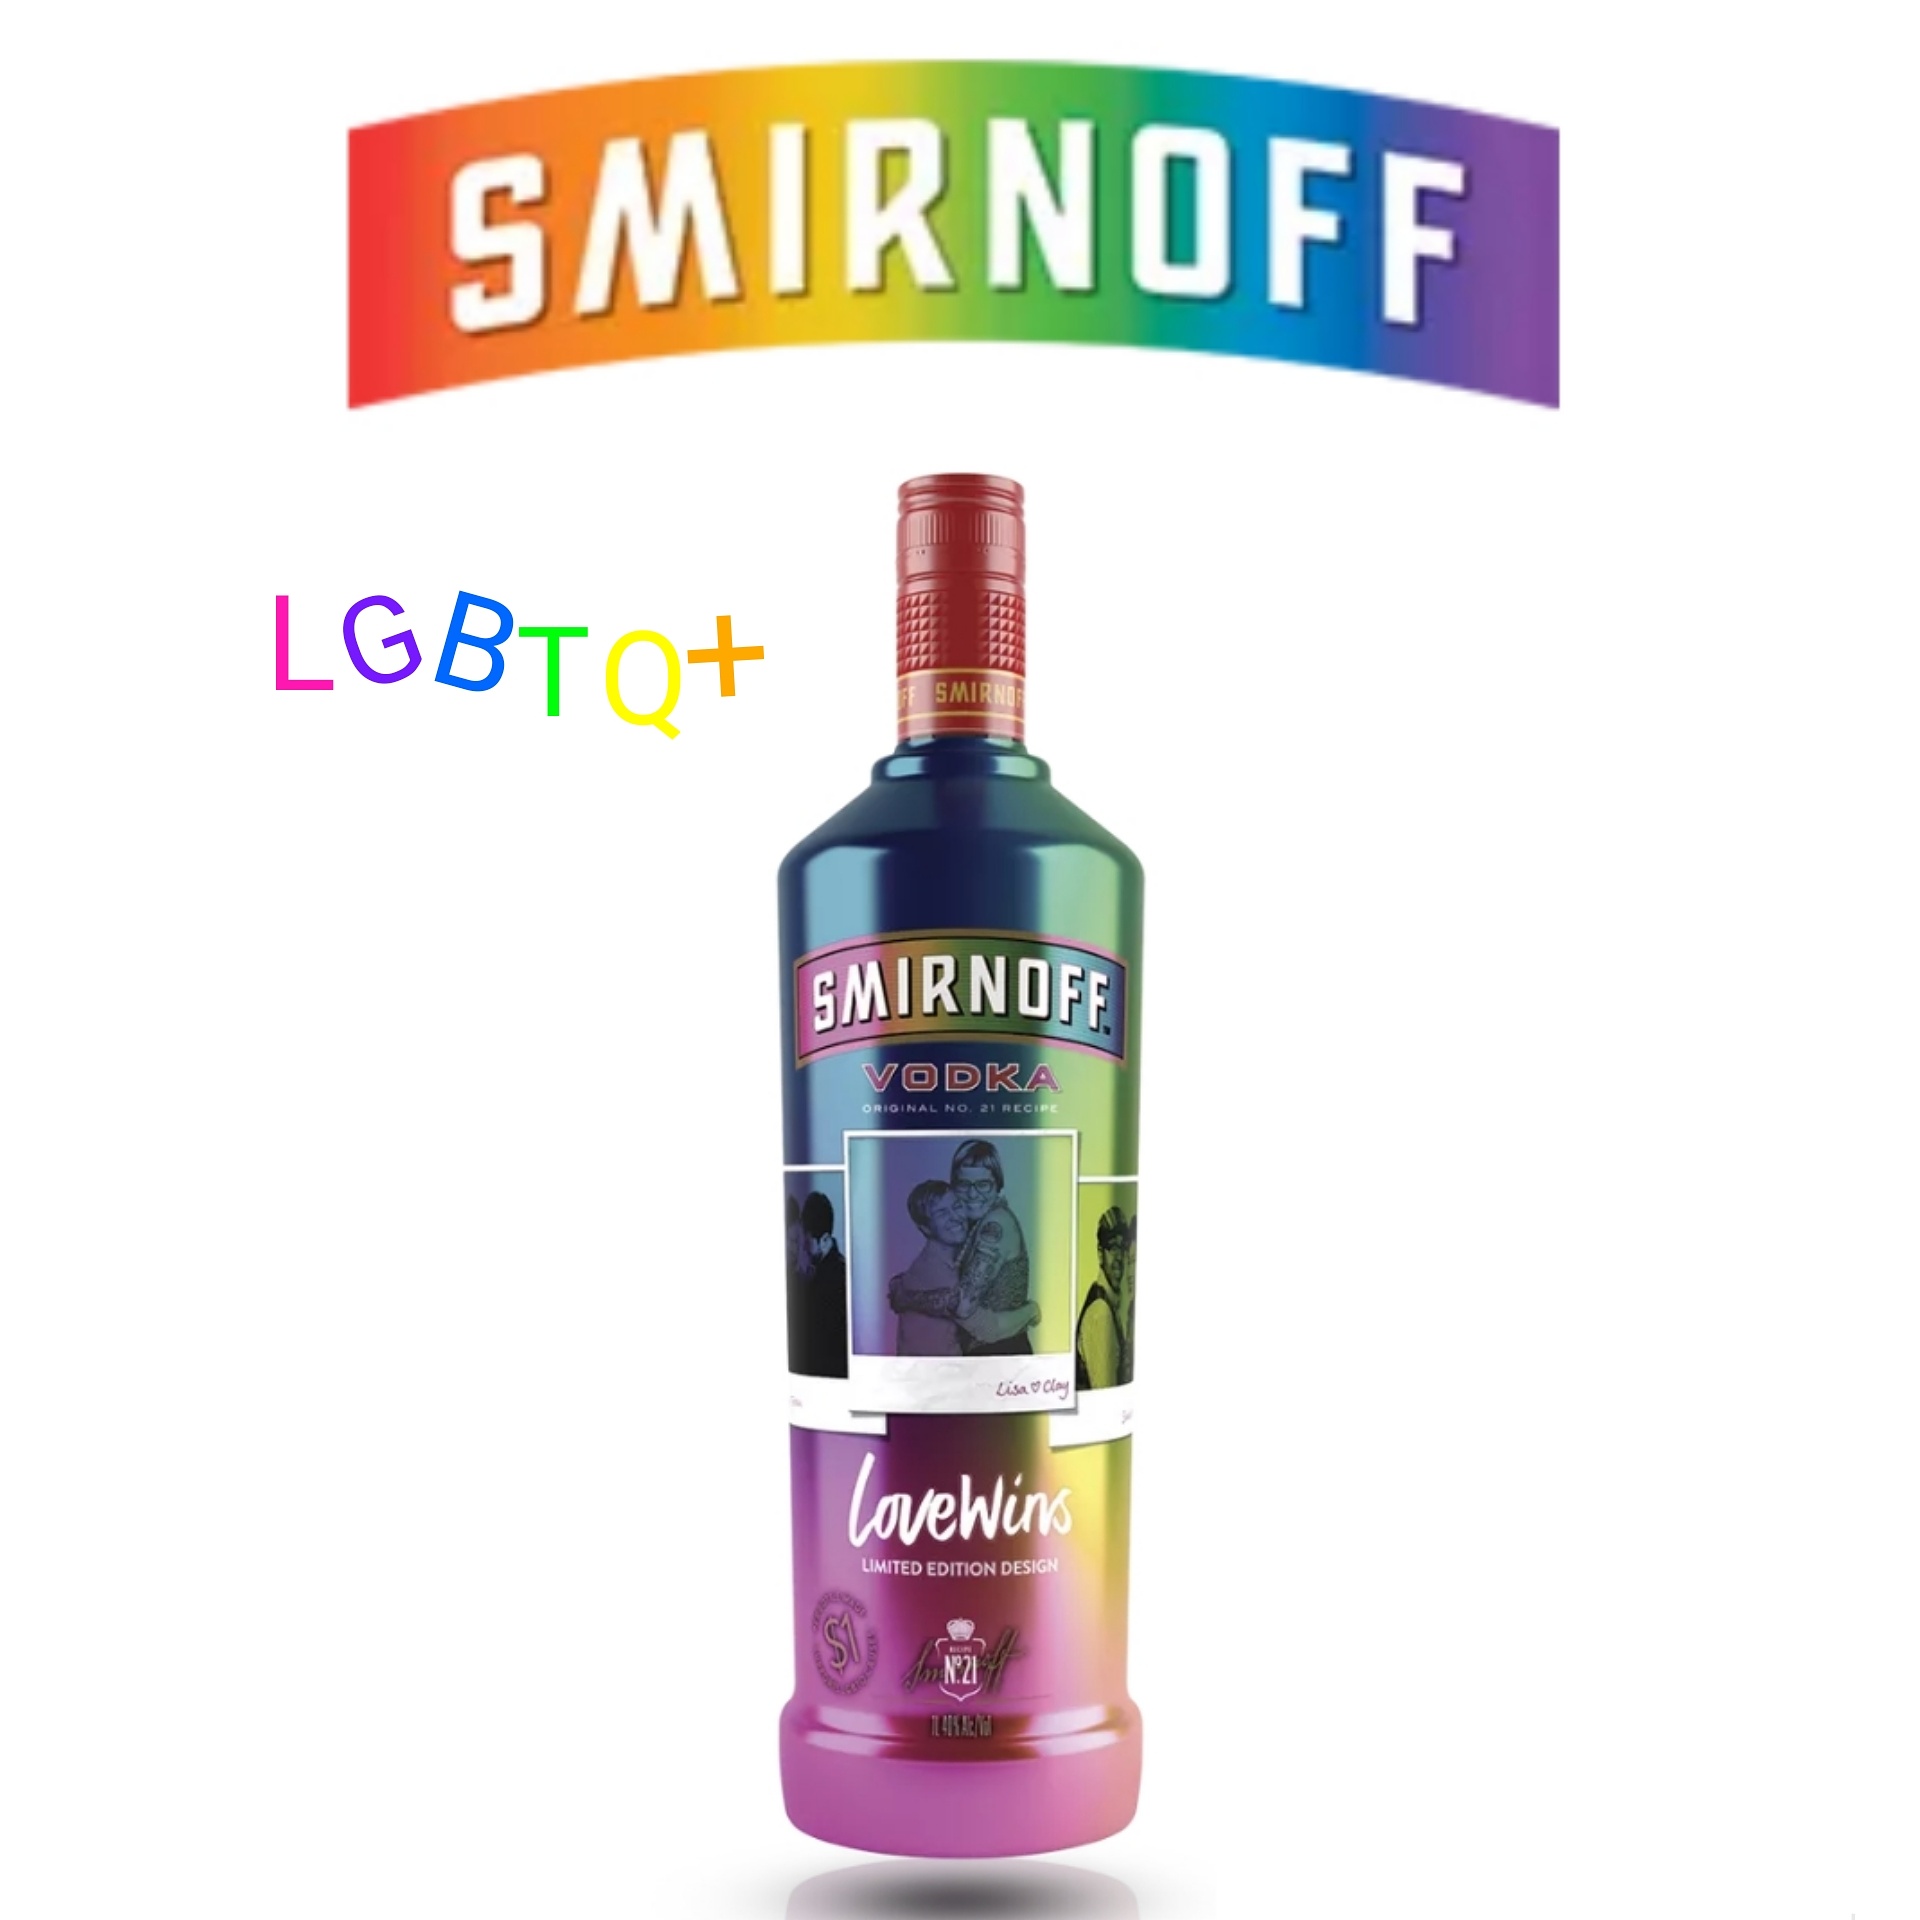 Smirnoff LOVE WINS Limited Edition Vodka [1L] from Pompei Baskets